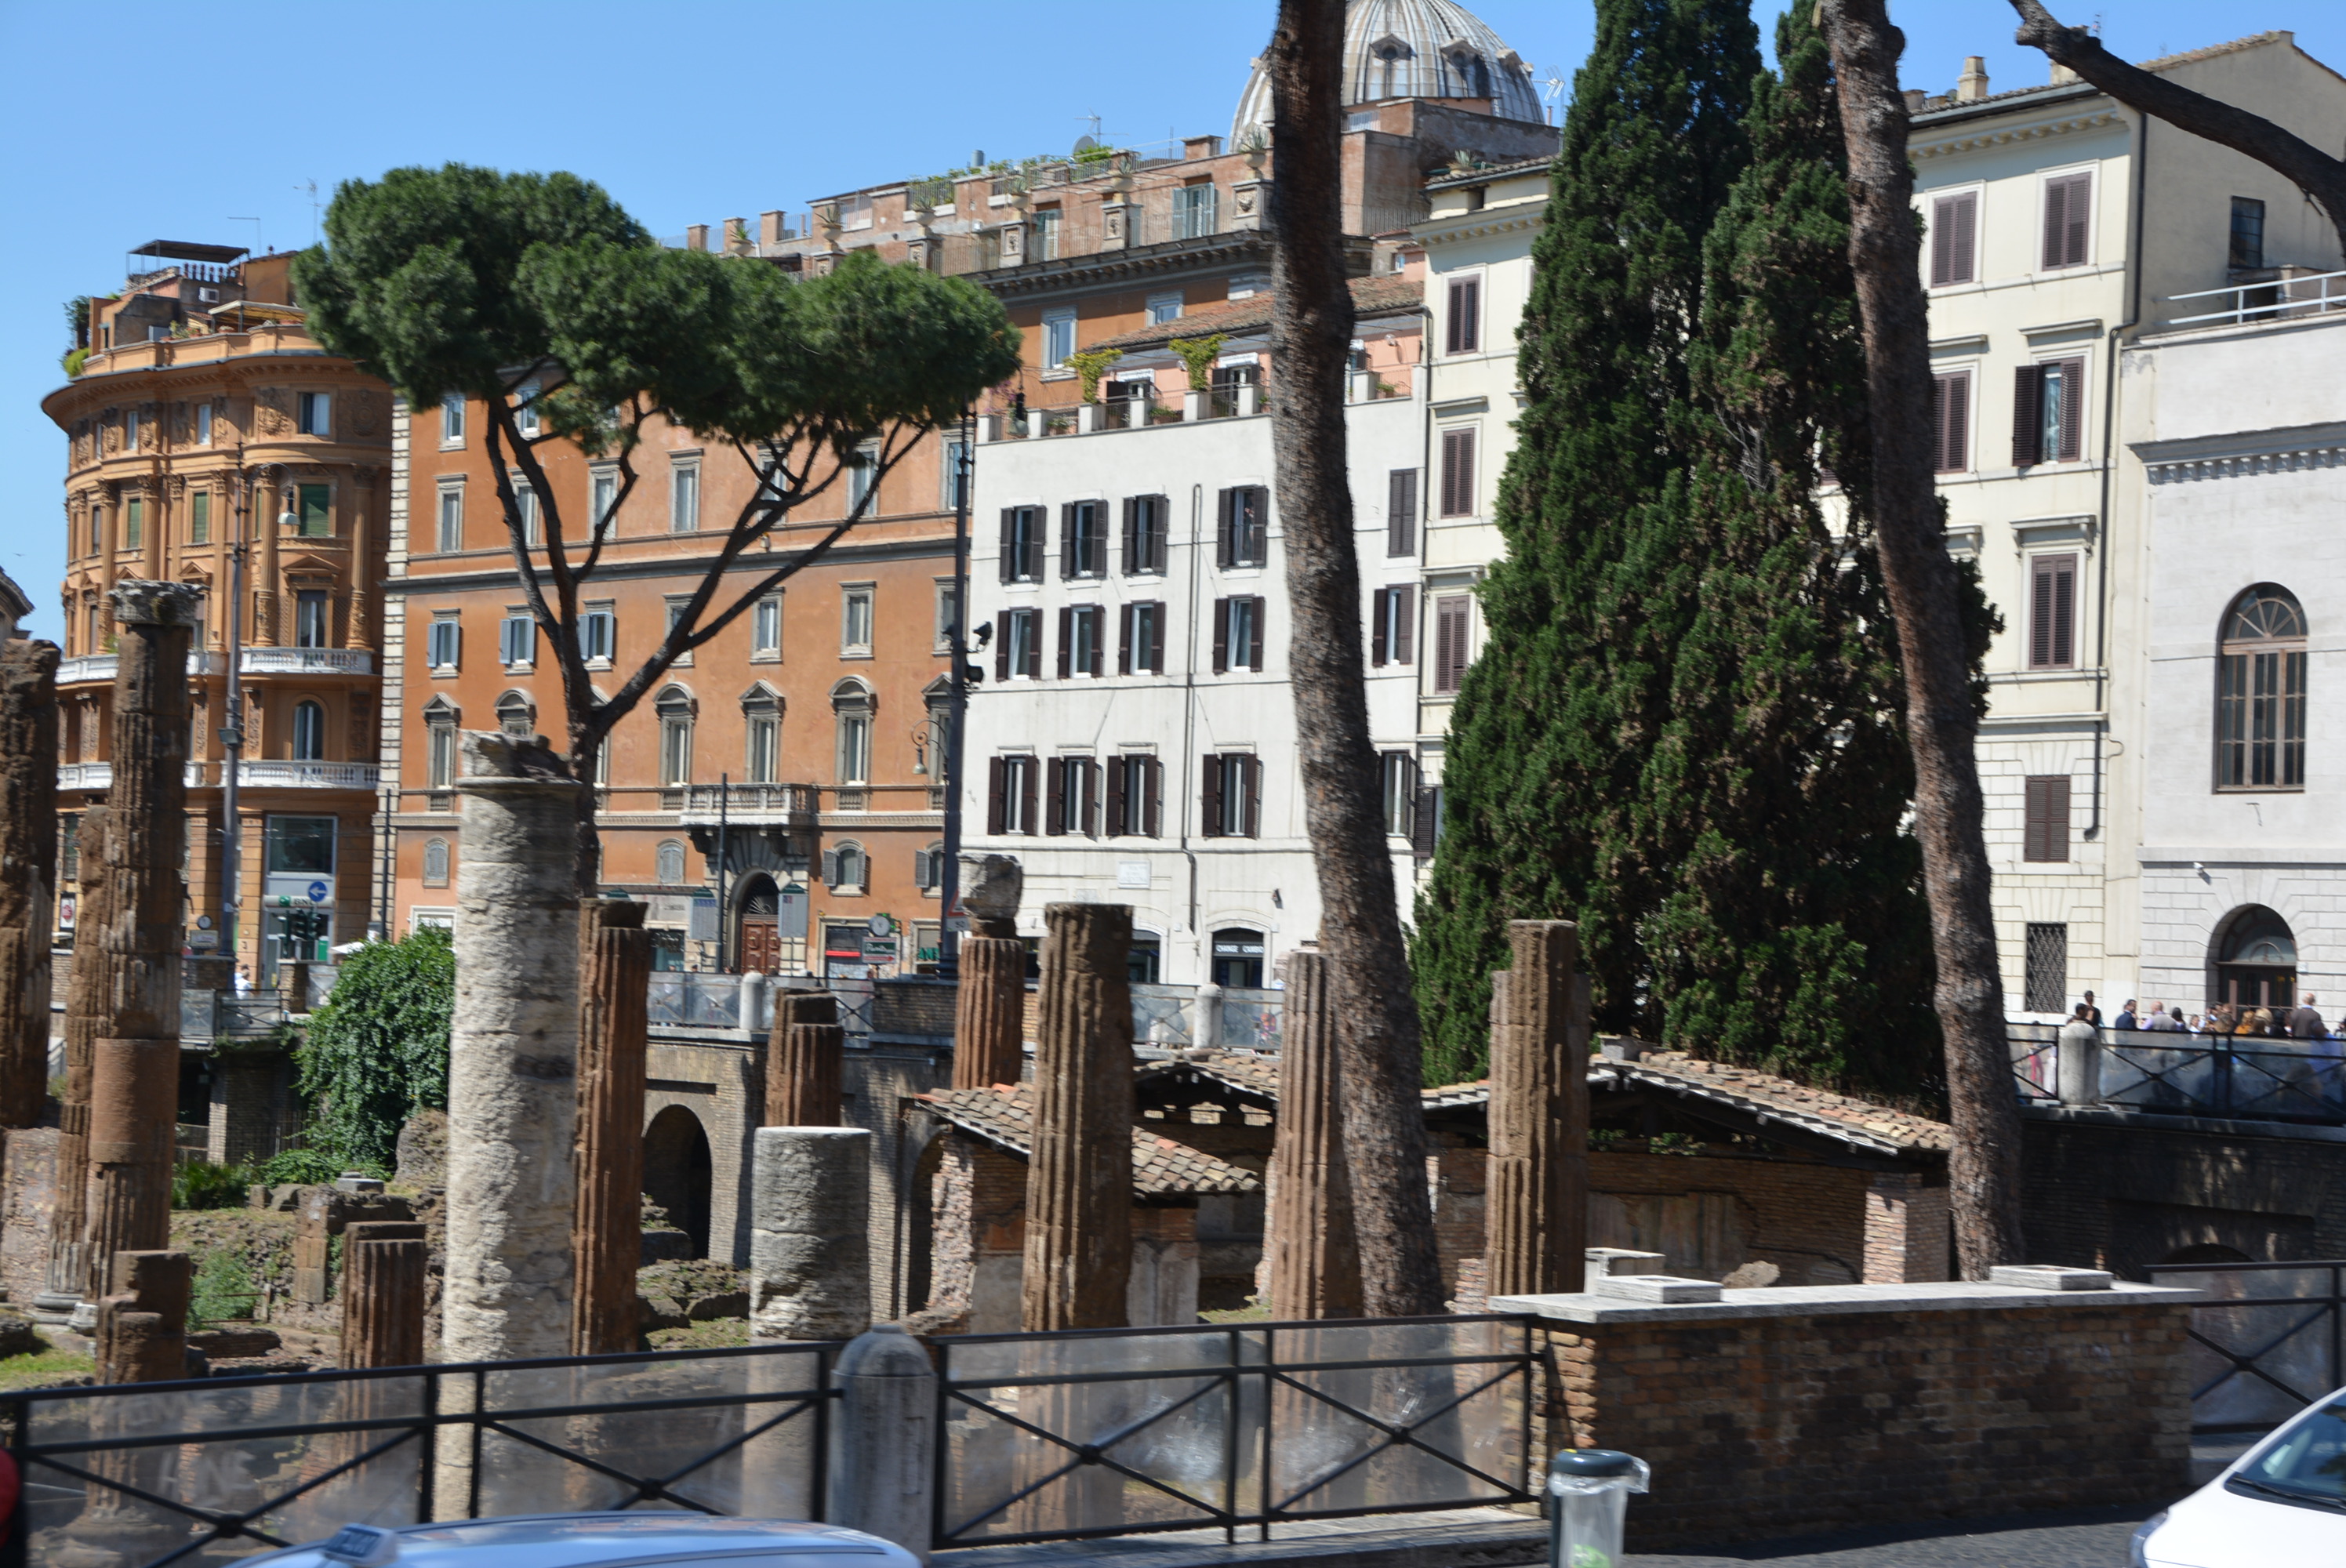 A Few Days in Rome: A Brief Entry